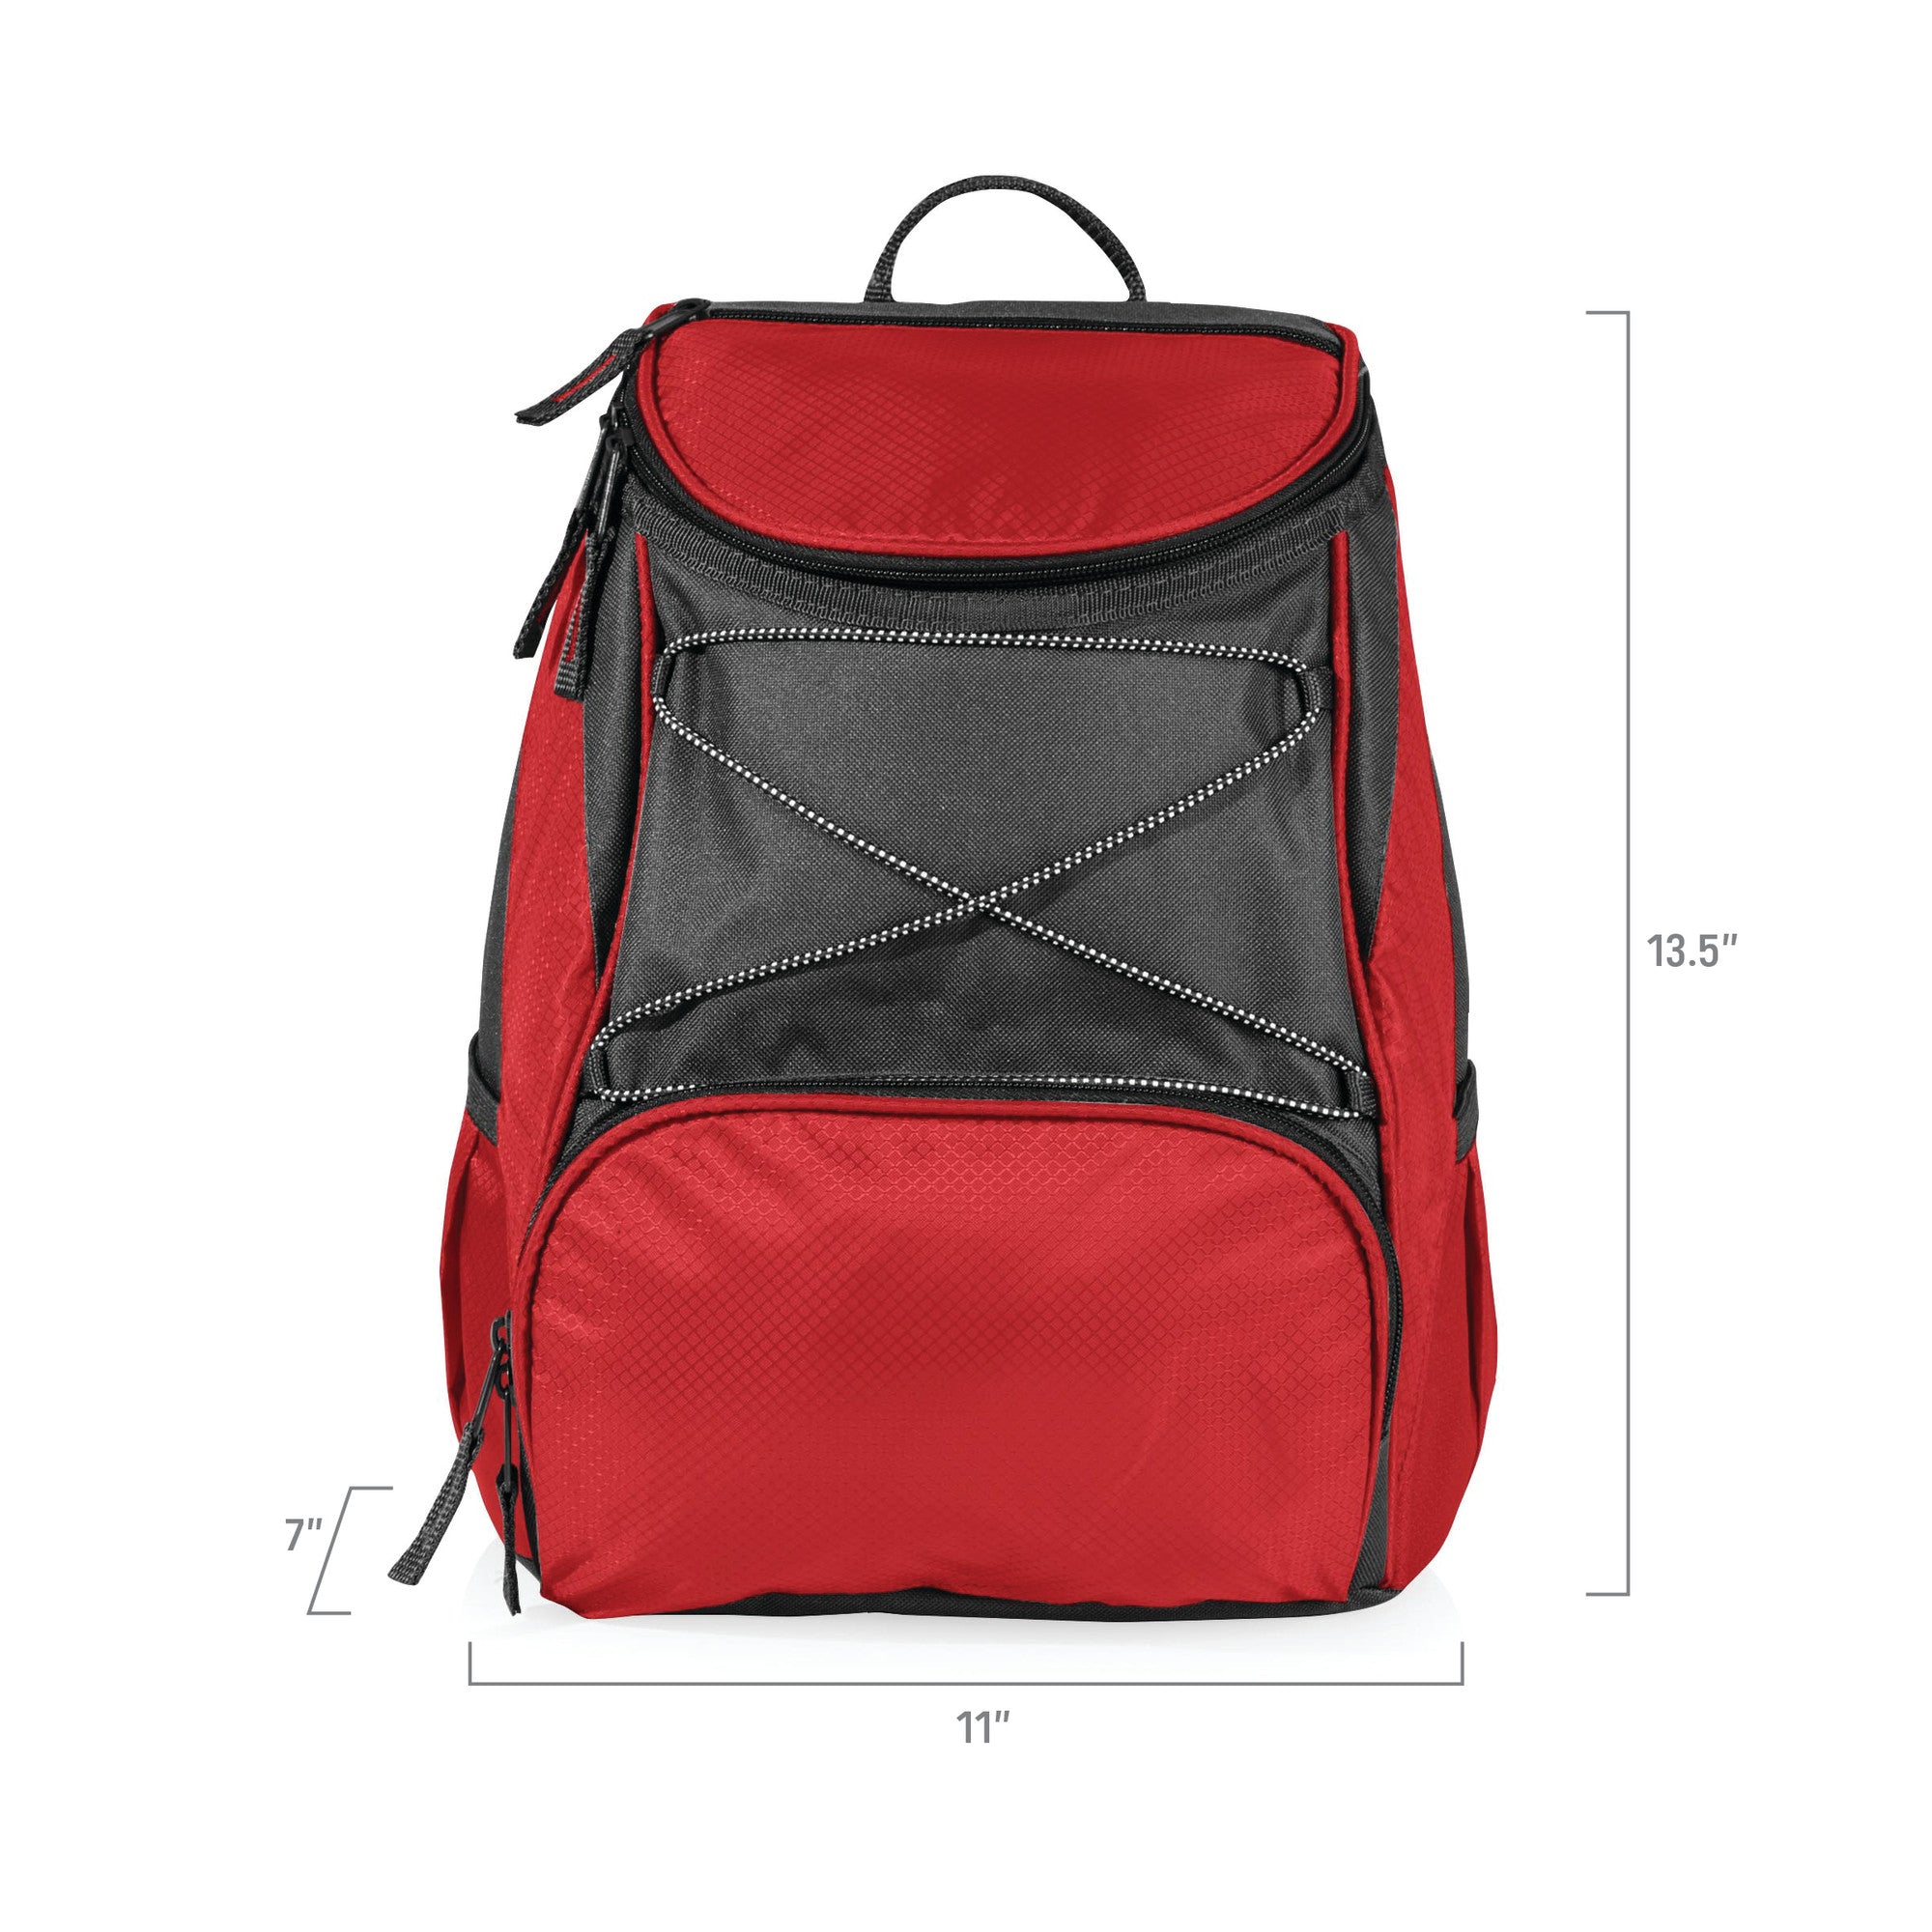 Cornell Big Red - PTX Backpack Cooler